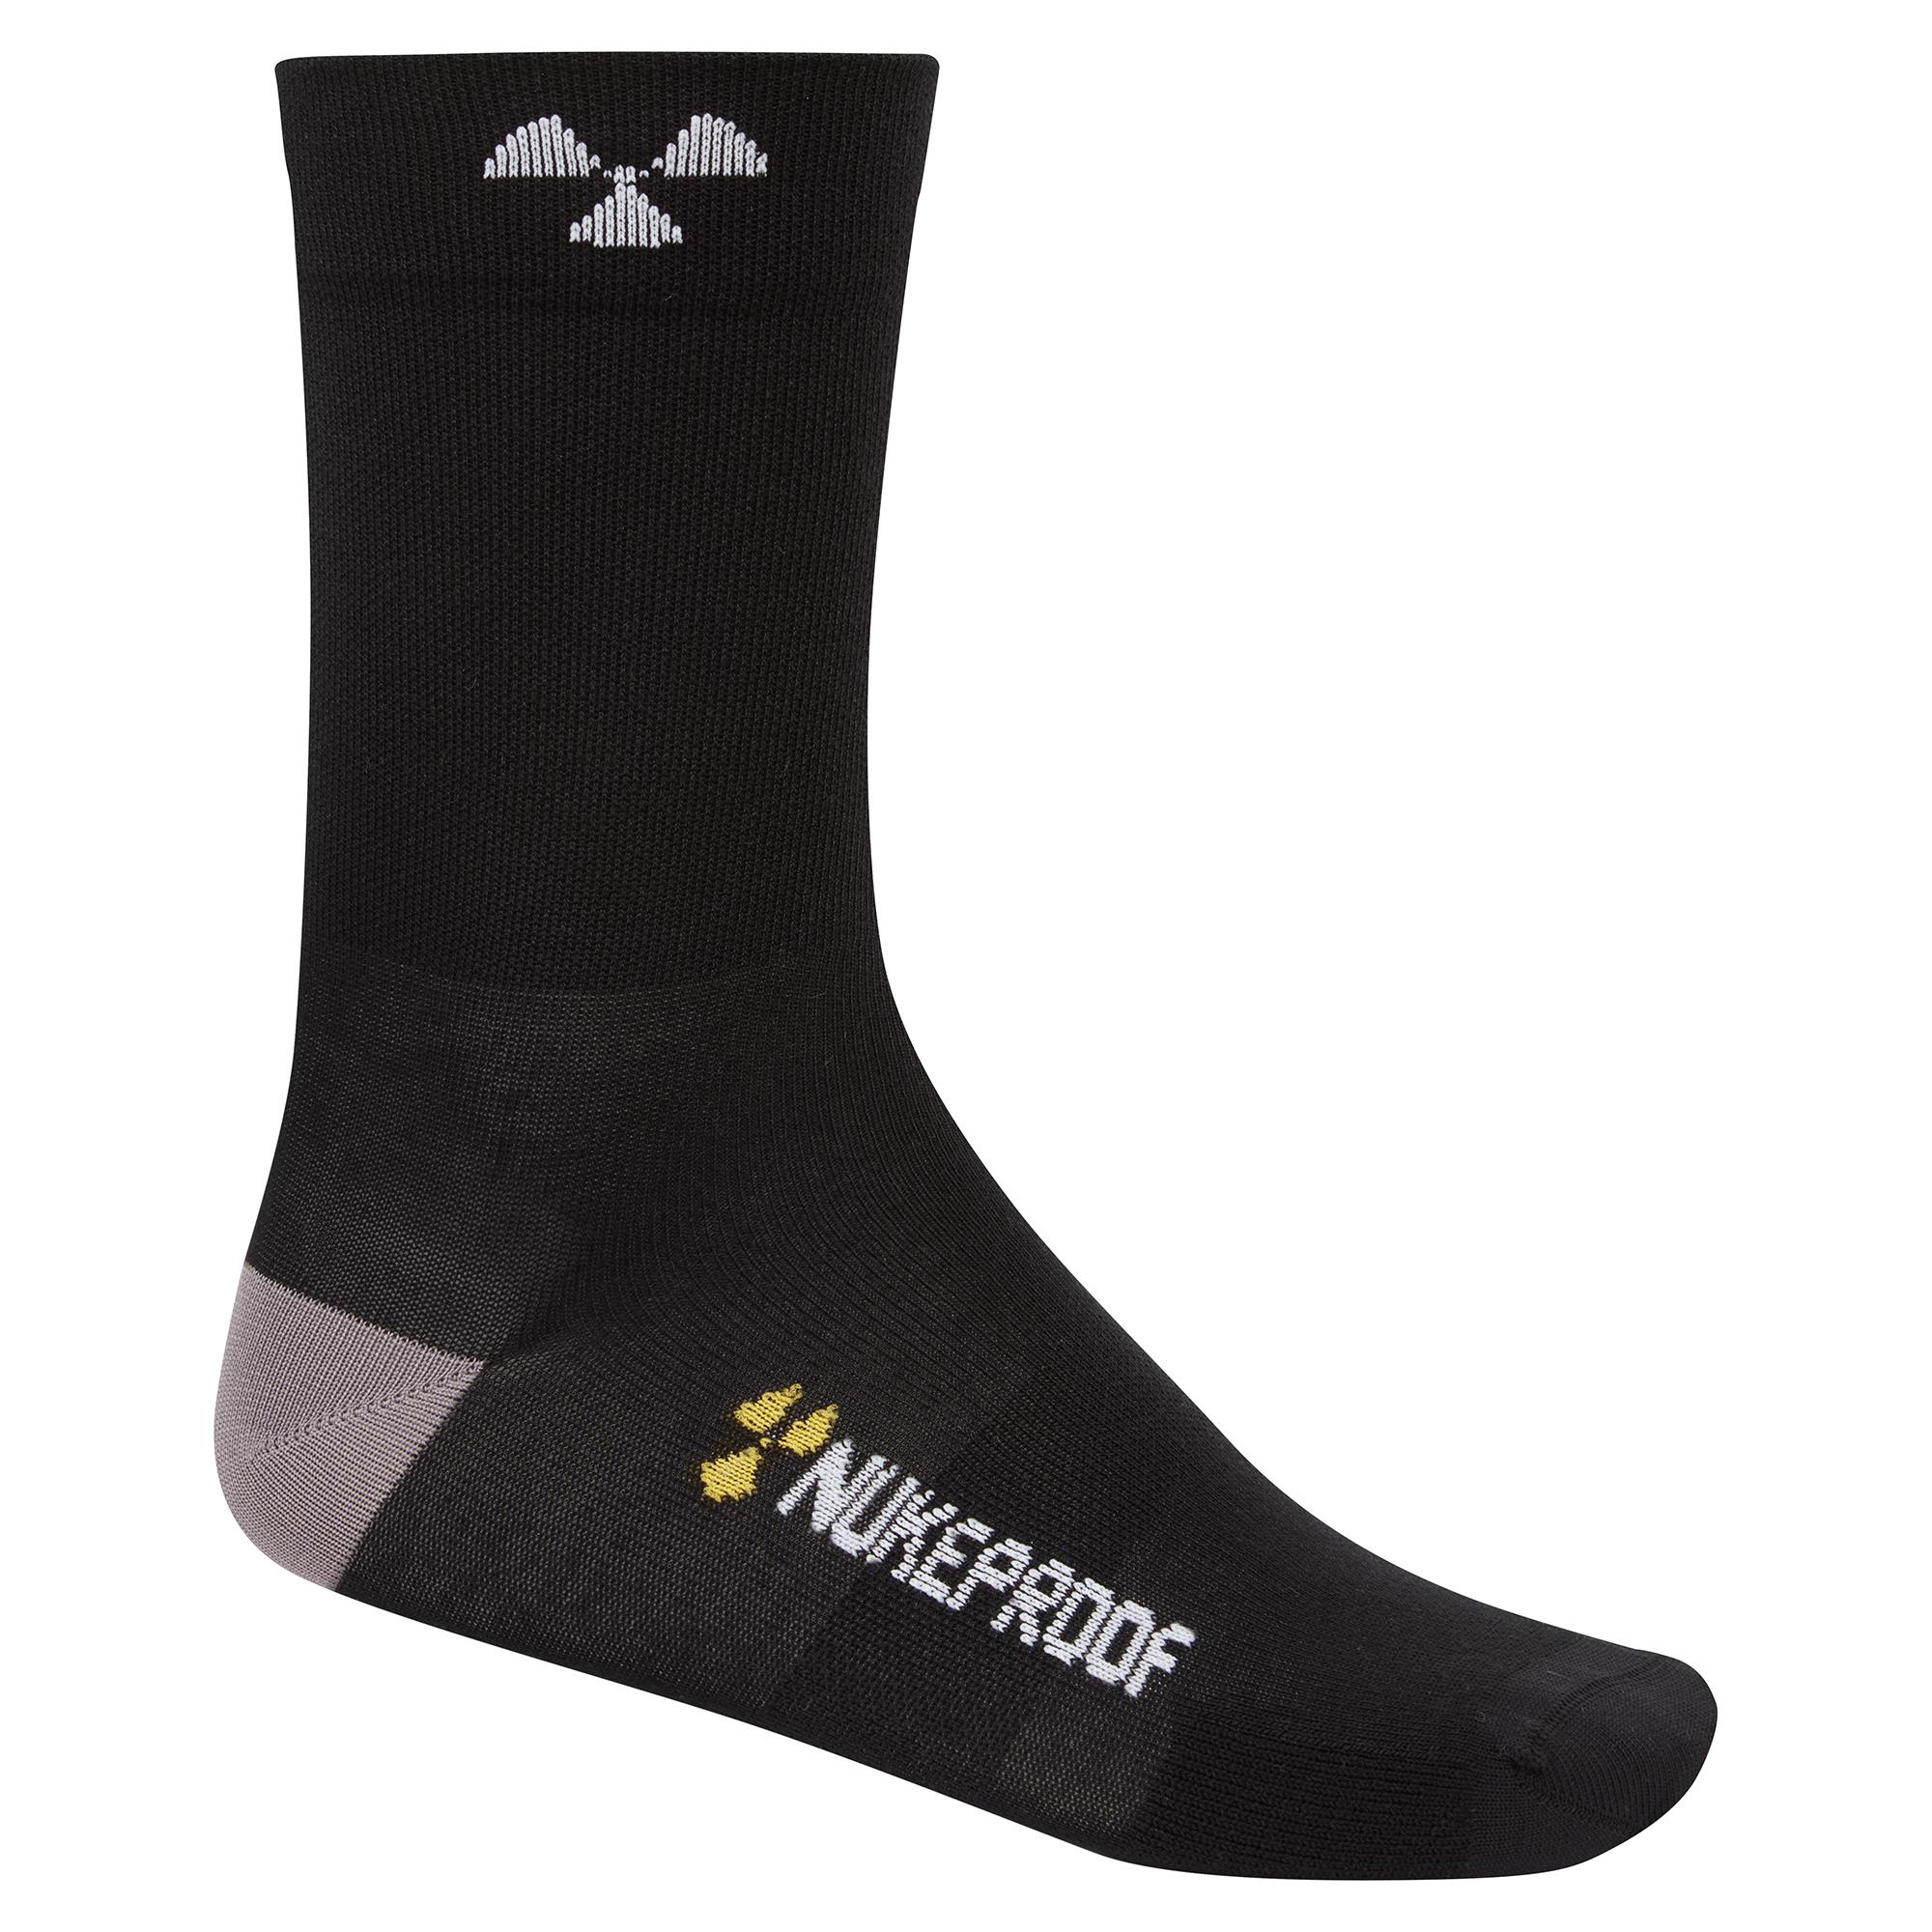 Nukeproof Outland Sock - Black/grey